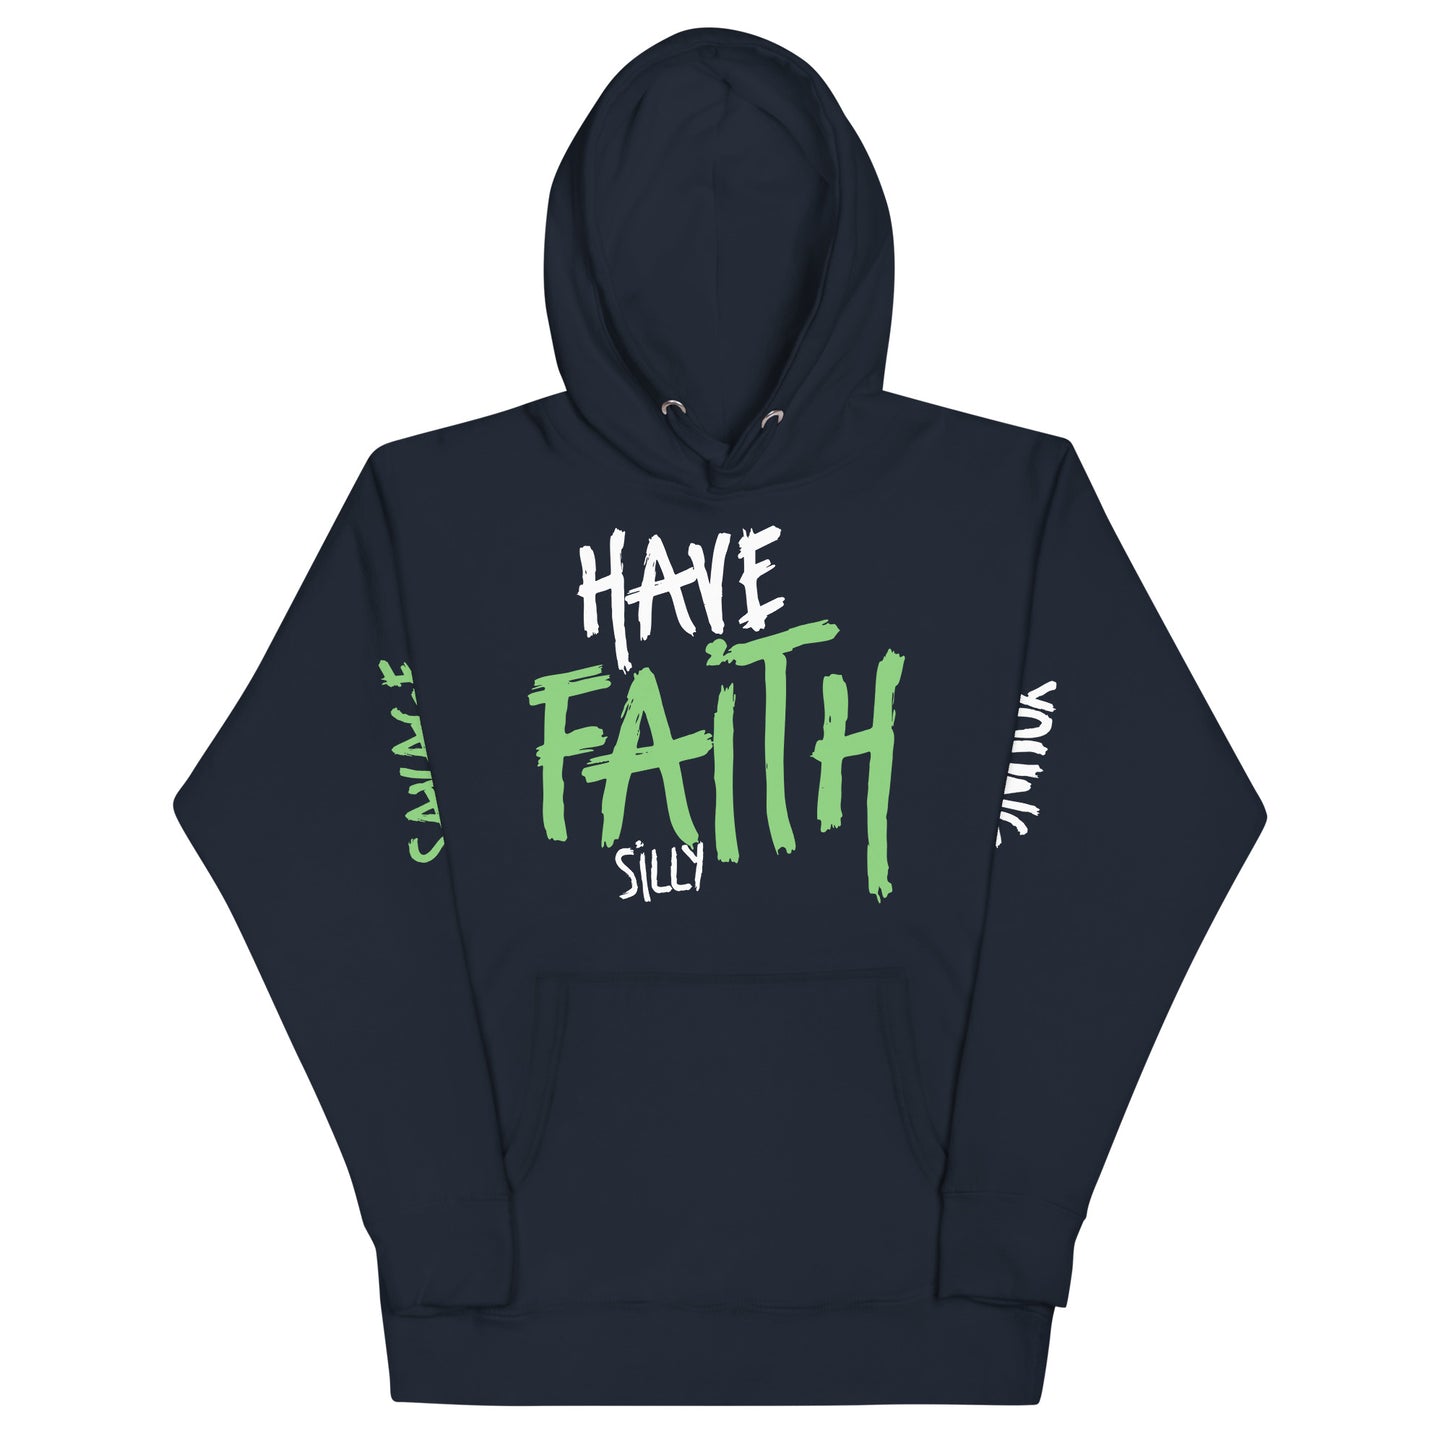 Have Faith Silly - Unisex Hoodie